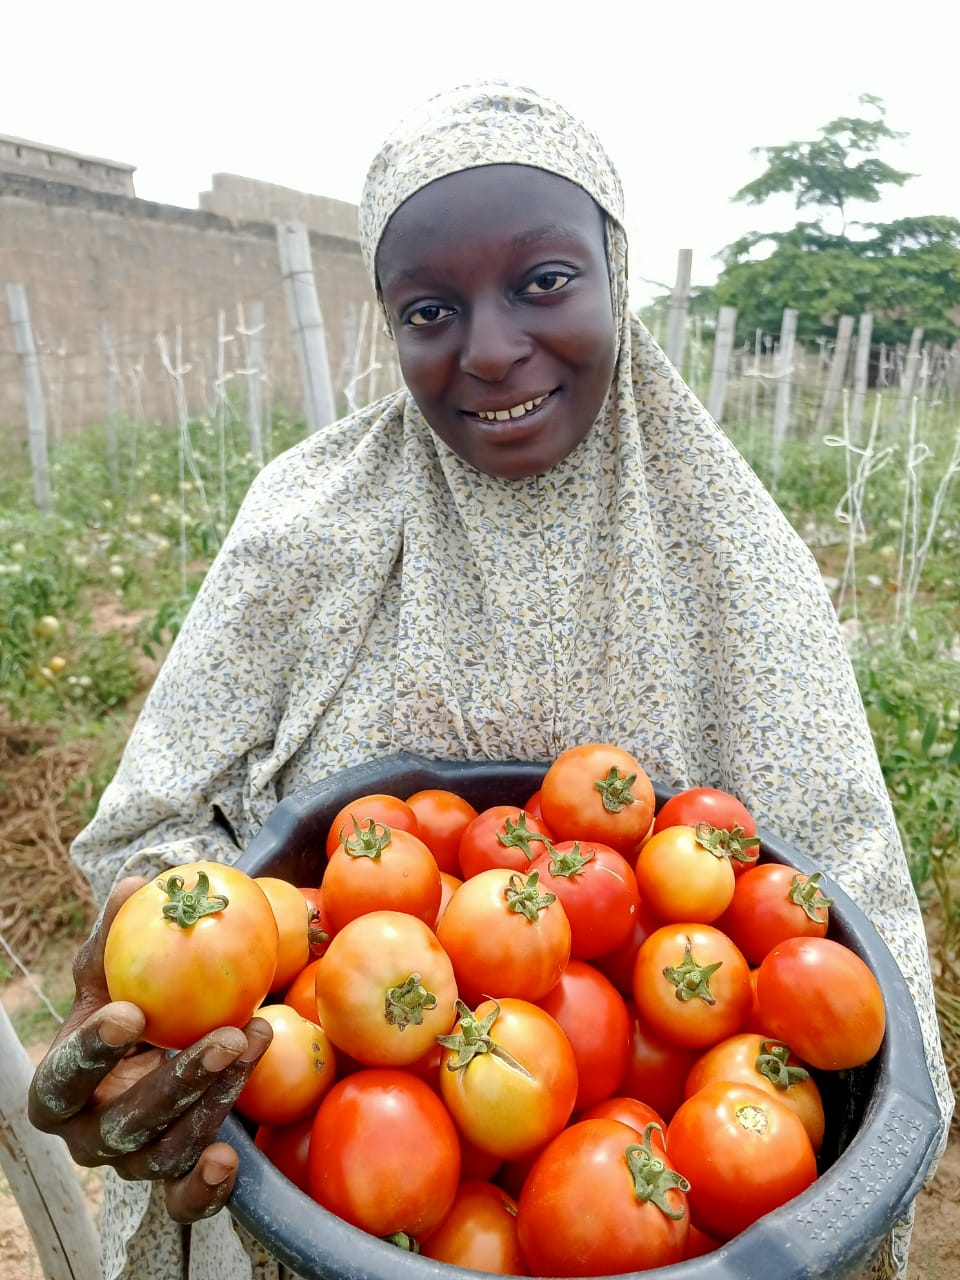 Farmer Na'ima Ado holding a basket of tomatoes